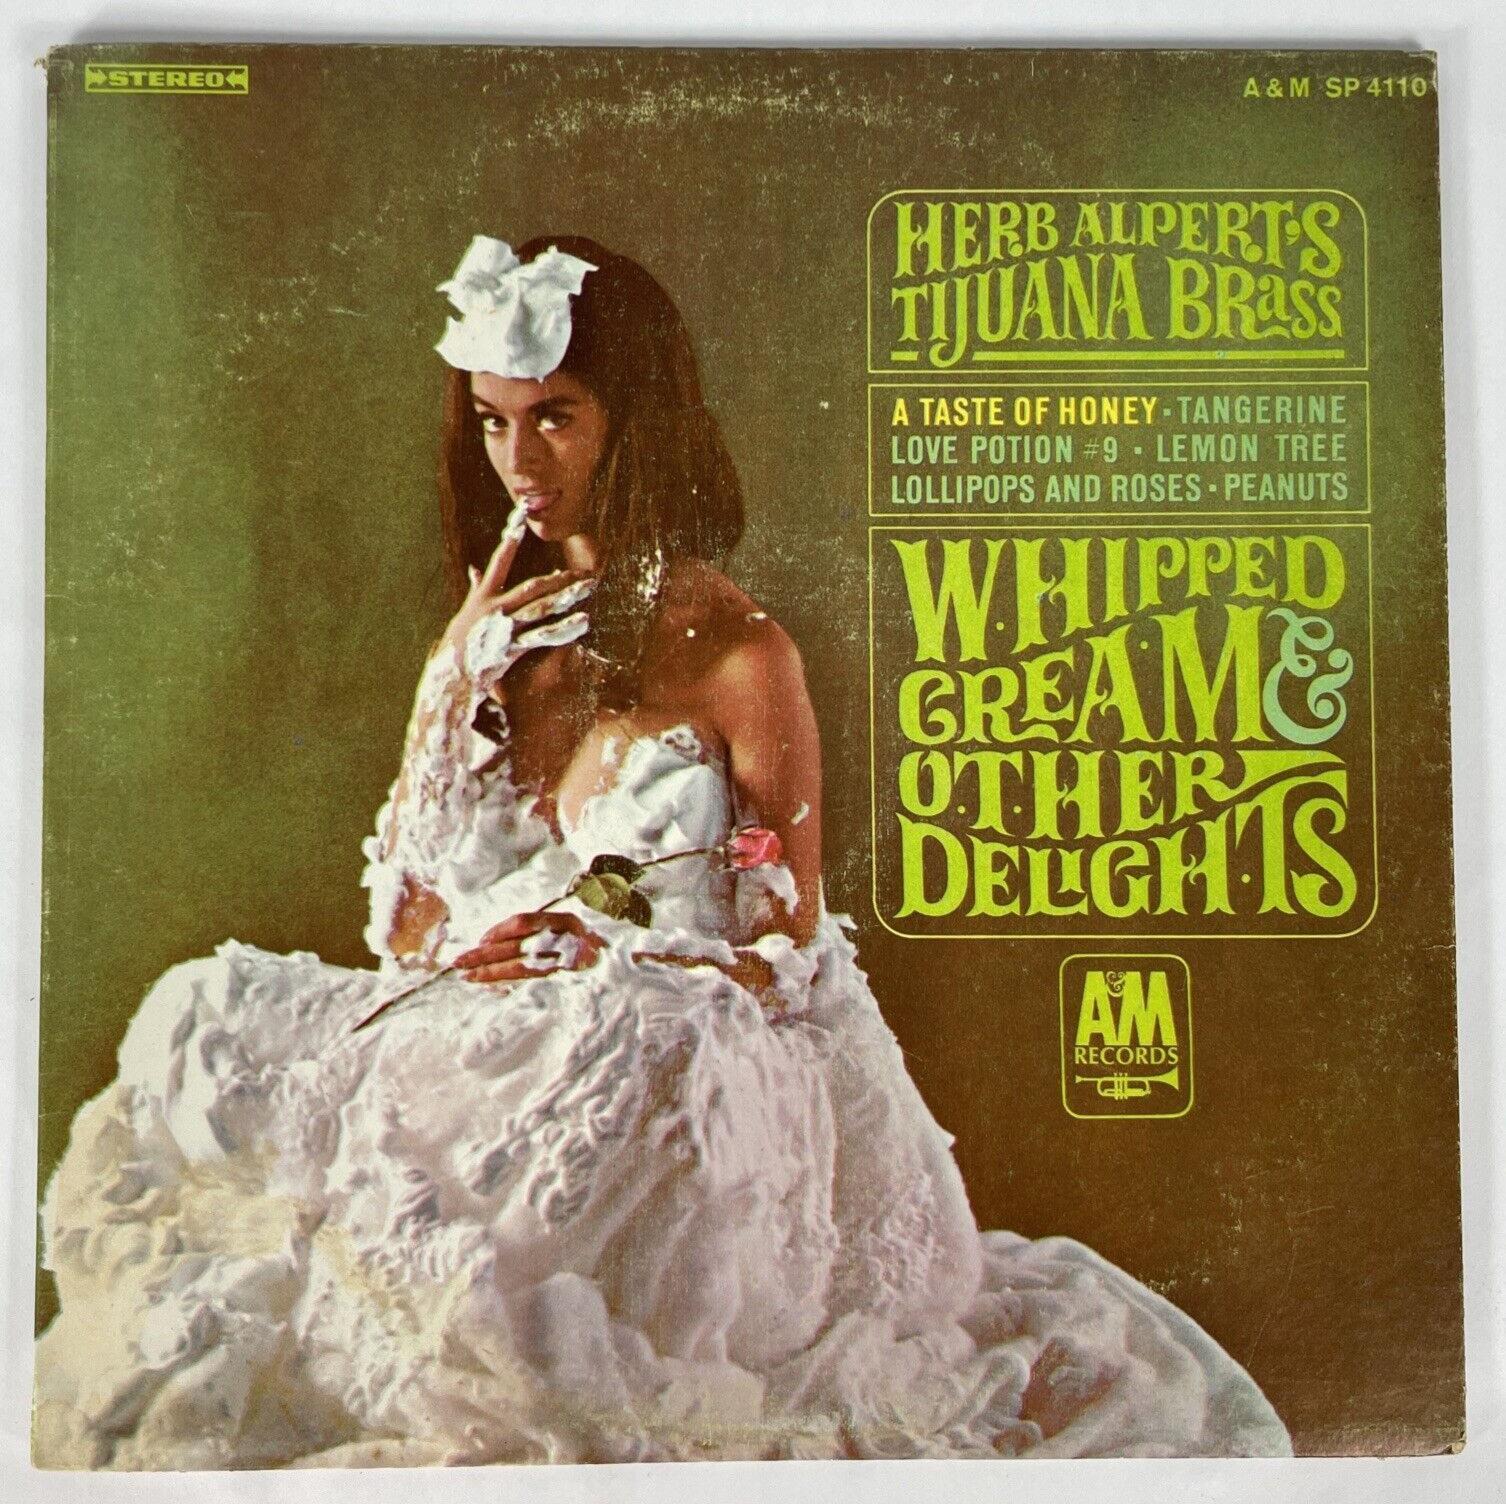 VTG: 1965 Herb Alperts Tijuana Brass Whipped Cream & Other Delights Vinyl Record